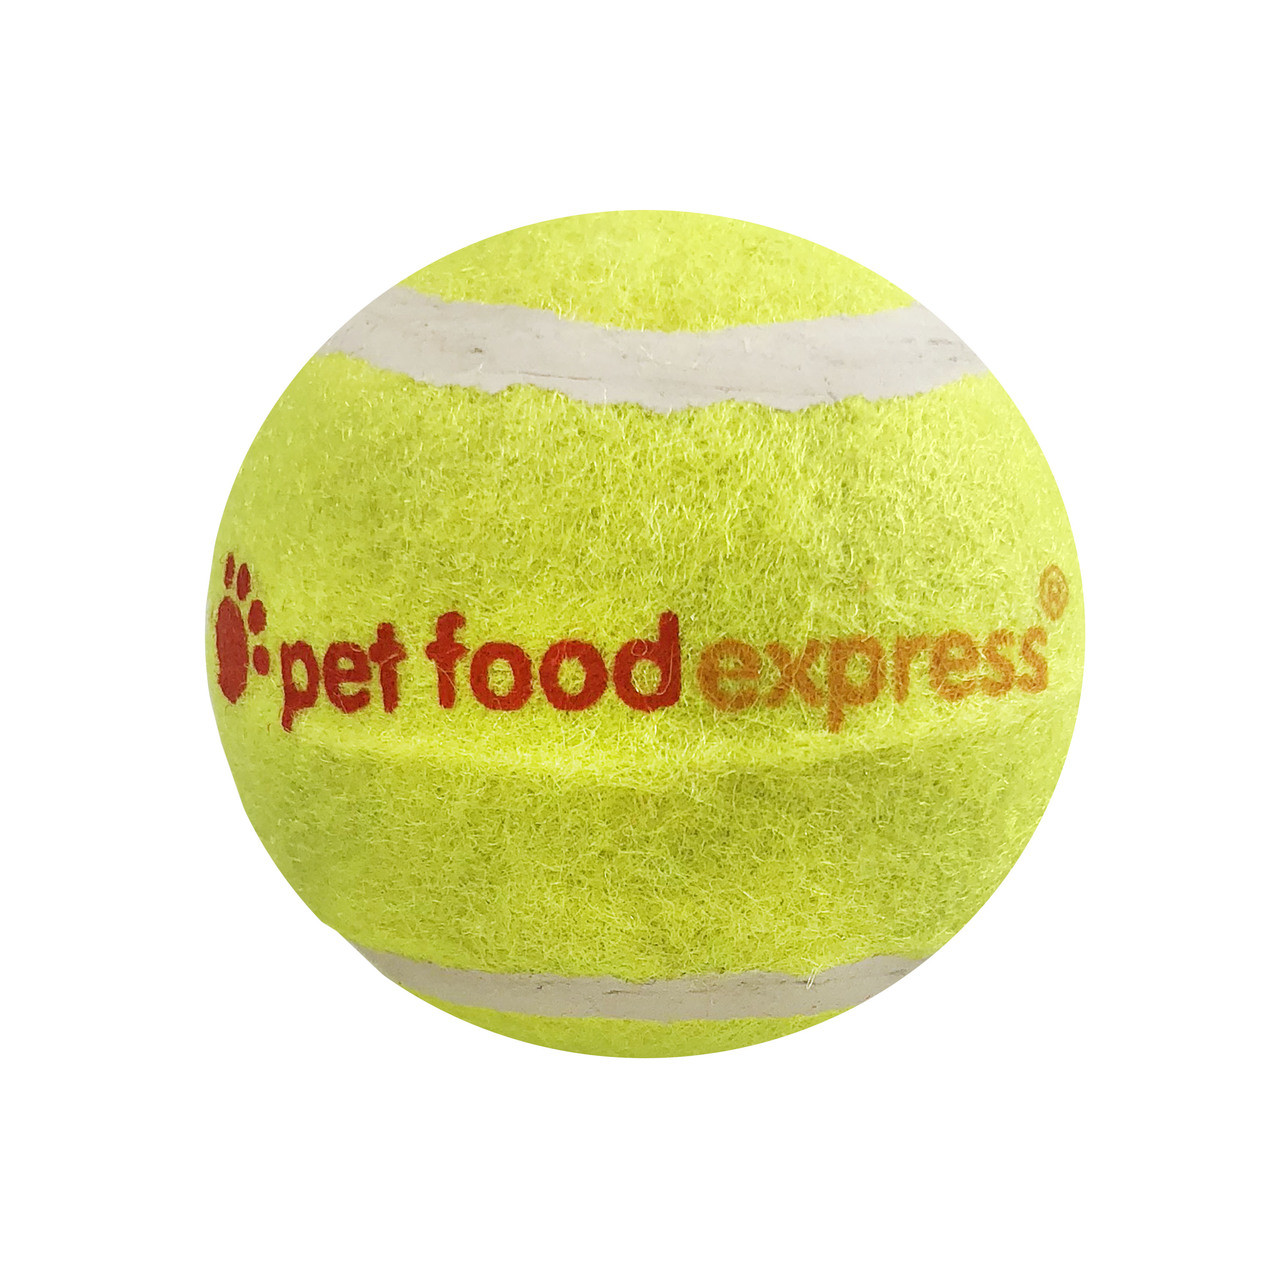 Pet Food Express Tennis Balls  - Front